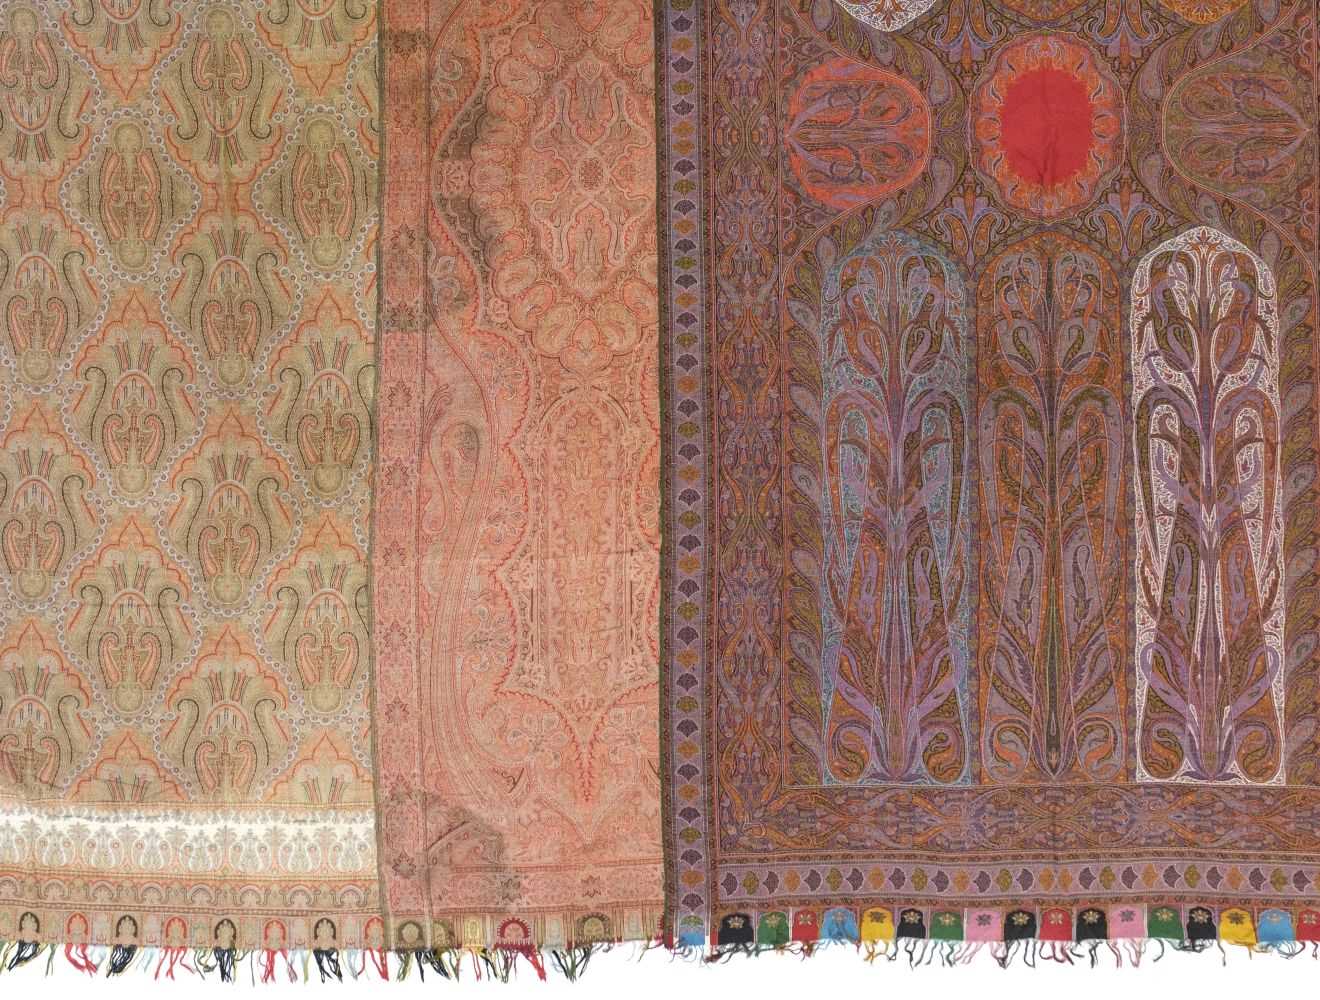 Lot 601 - Shawls. Three large Paisley shawls, mid 19th century